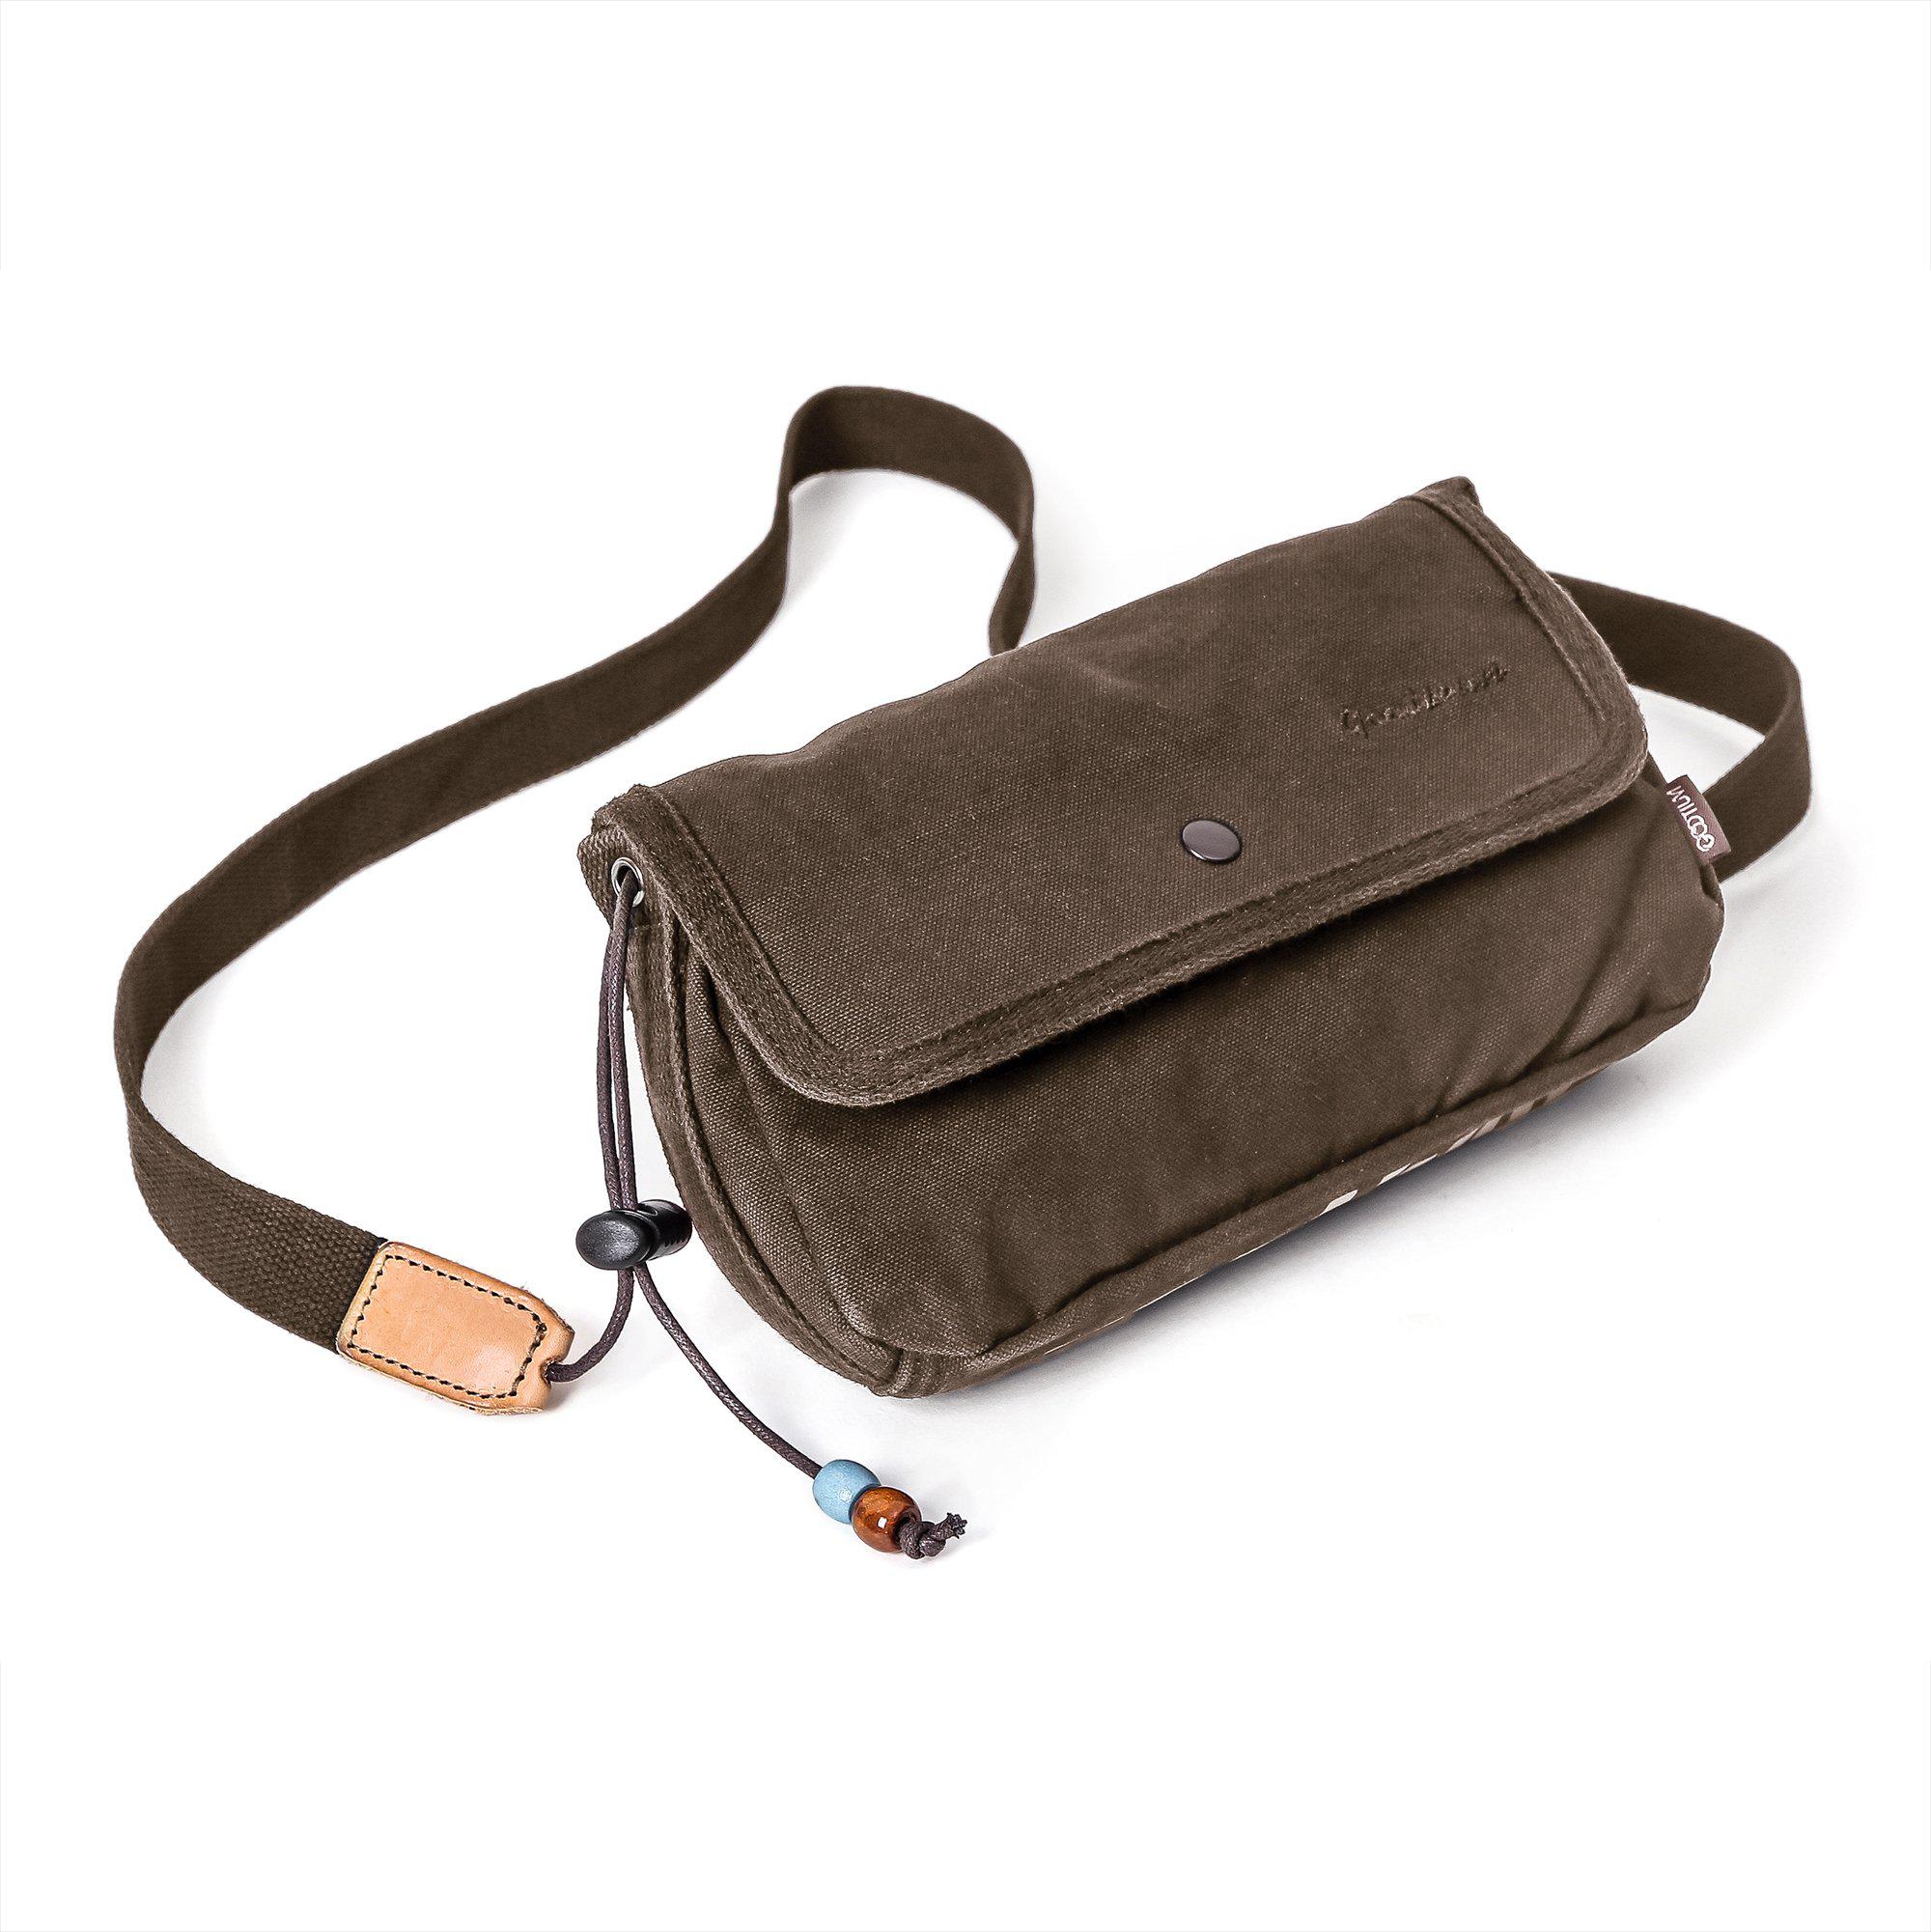 Gootium Canvas Small Crossbody Purse - Flap Shoulder Bag Daily Essentials Pouch